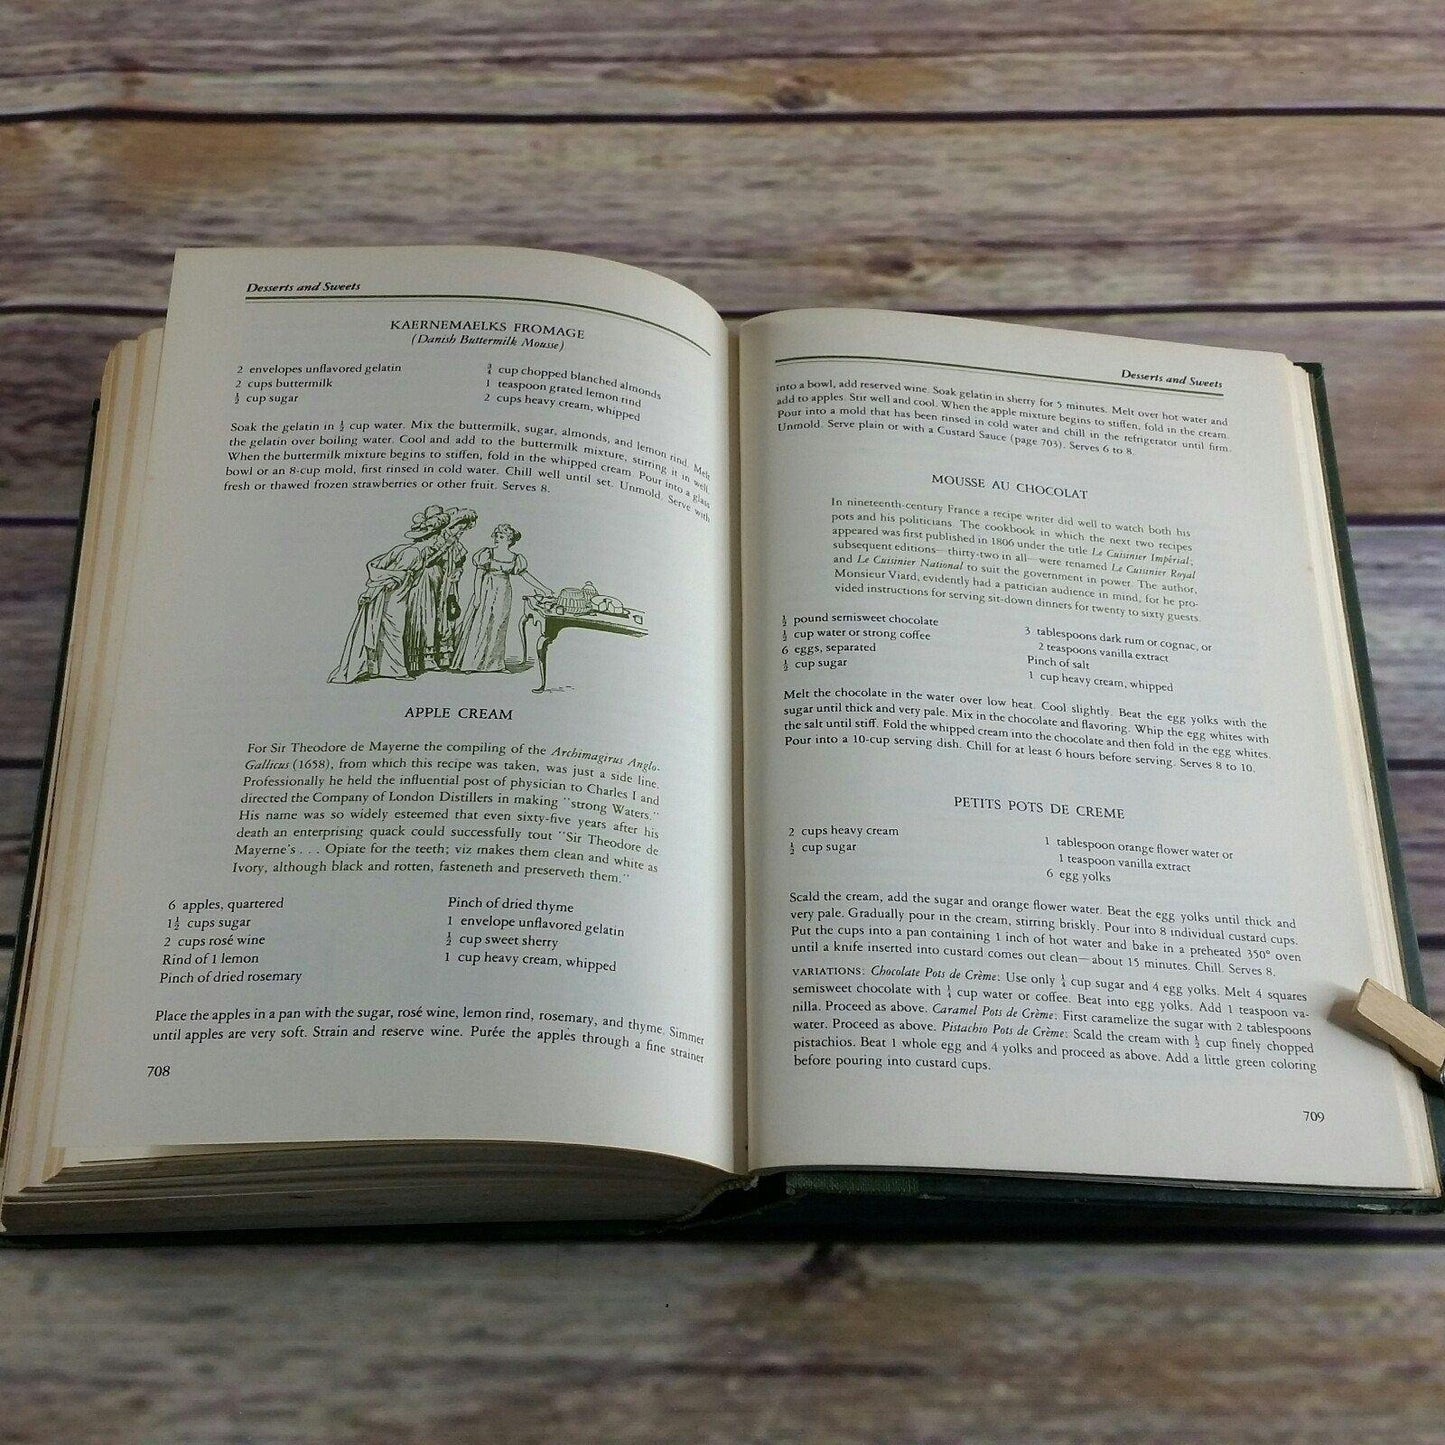 Vintage Cookbook The Horizon Cookbook and Illustrated History 1968 Hardcover 600 International Recipes and Menus William Hale